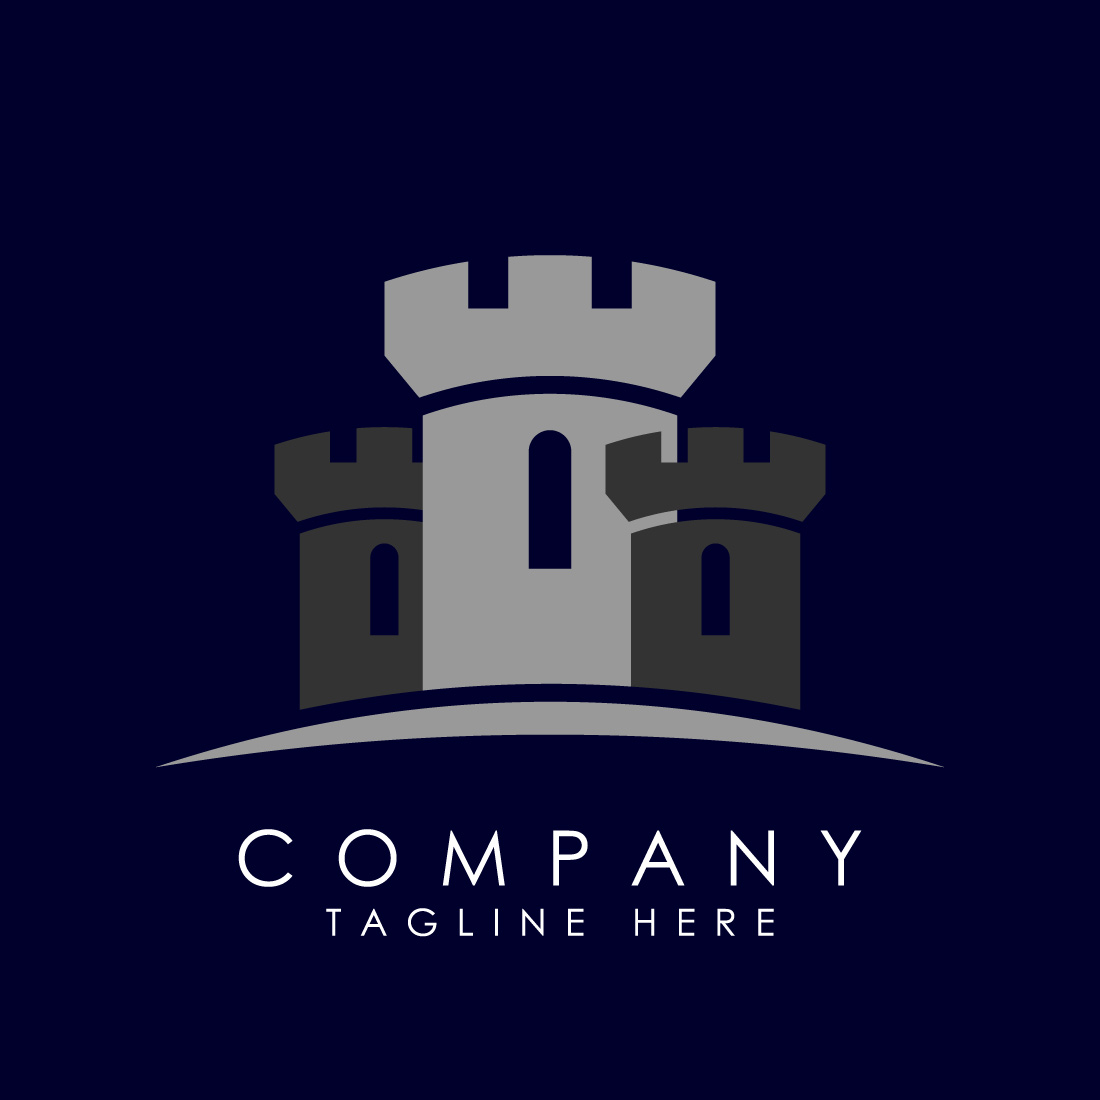 Castle tower logo design vector illustration Castle icon sign symbol preview image.